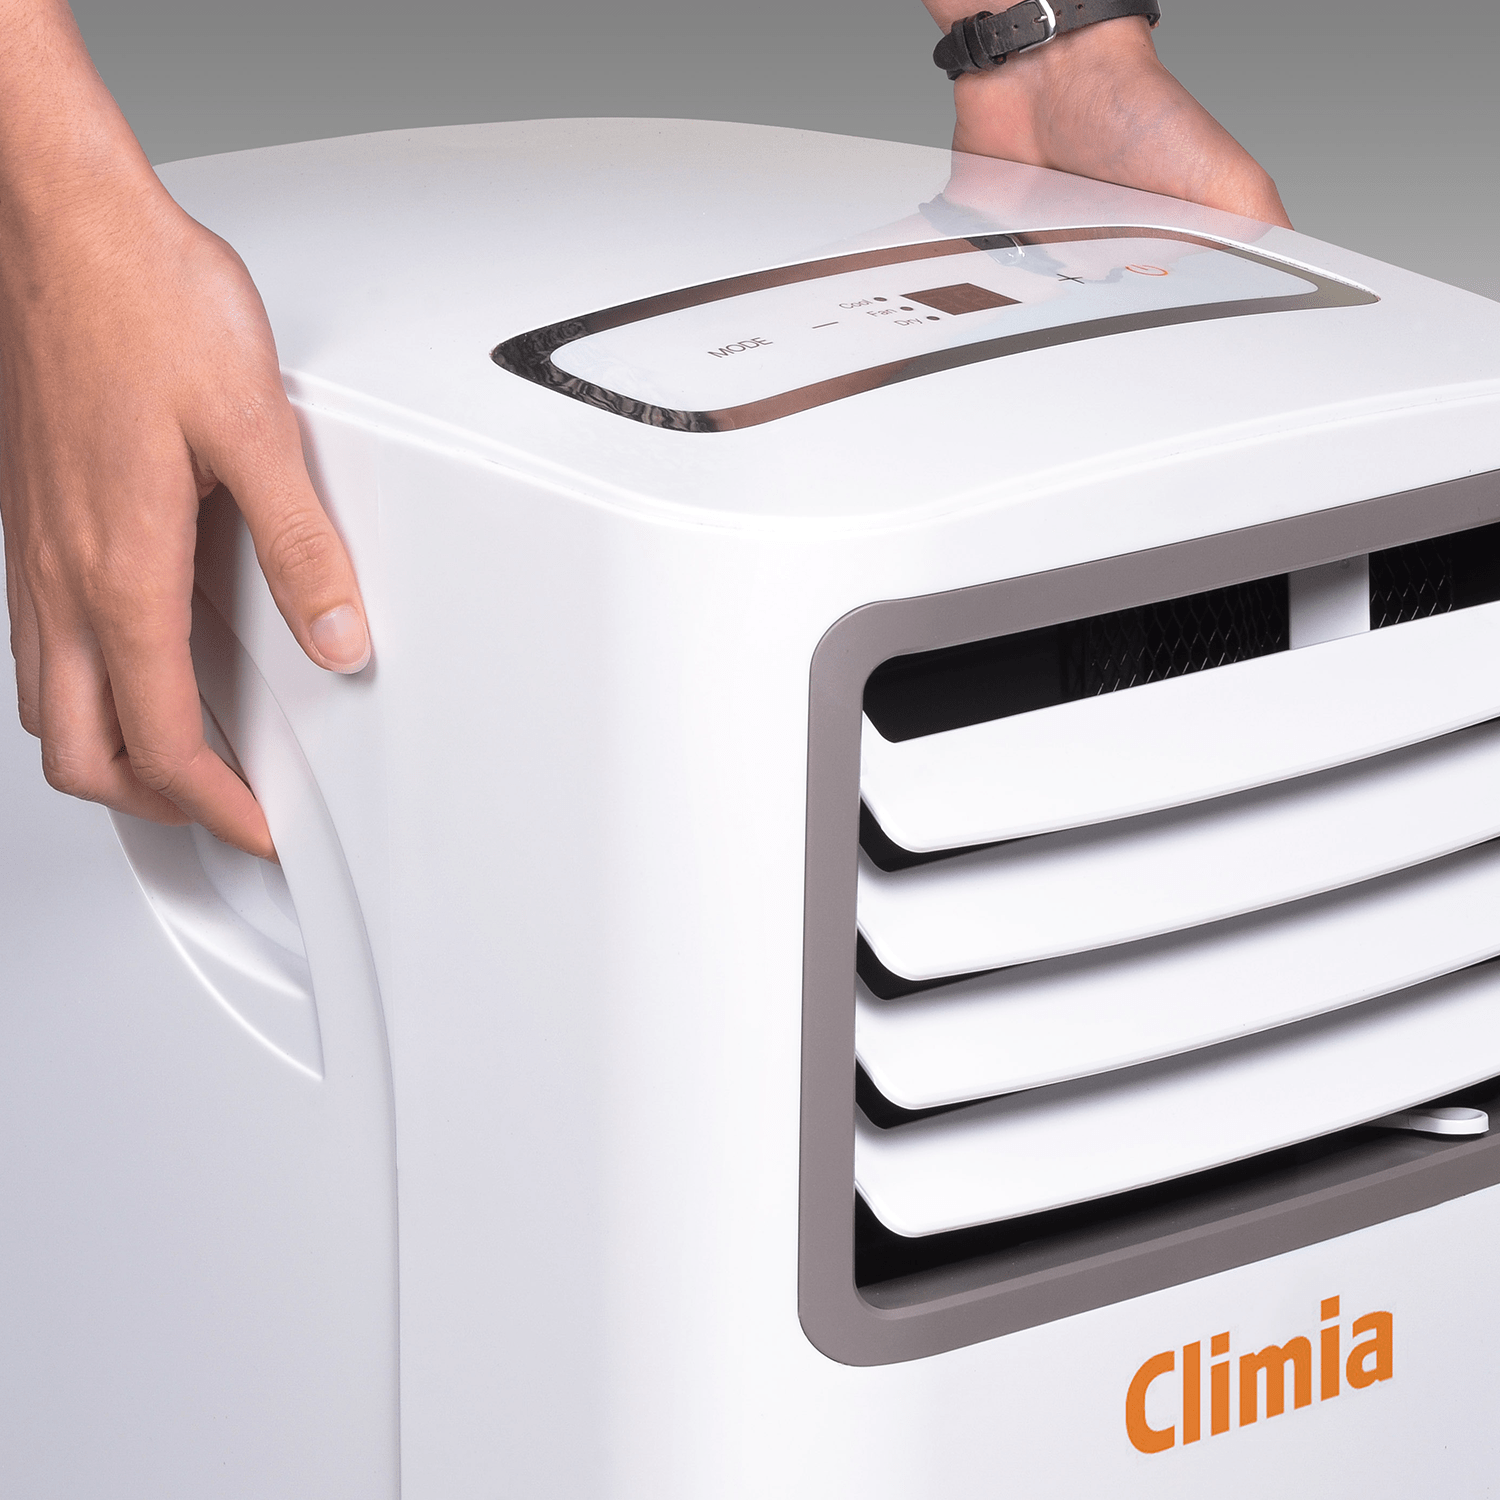 Climia CMK 2600 Sparpaket #5  - Klimagerät inkl. Fensteradapter (2021) & Schutzhülle